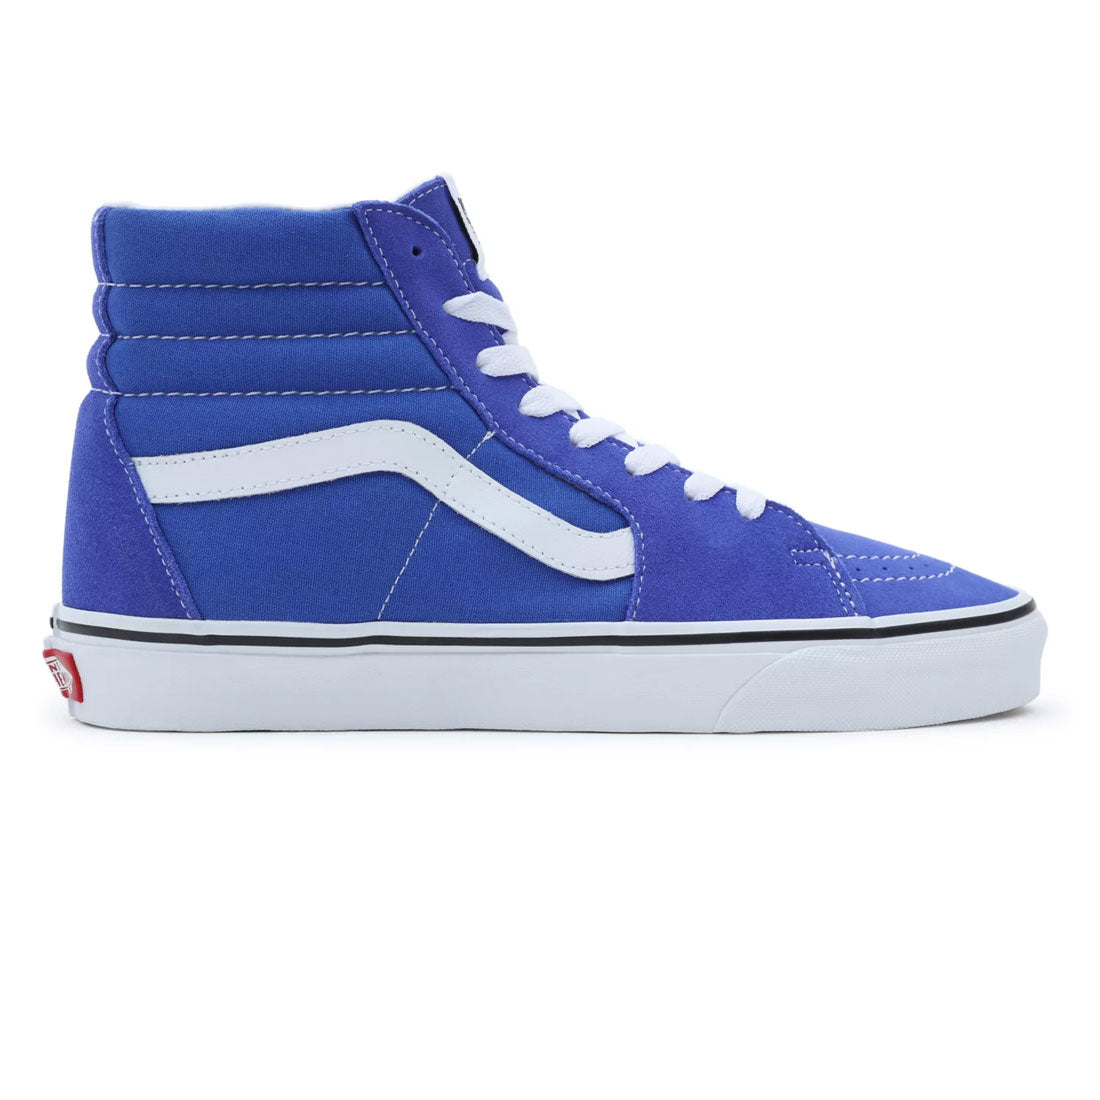 Vans SK8-HI Shoe - Dazzling Blue Shoes